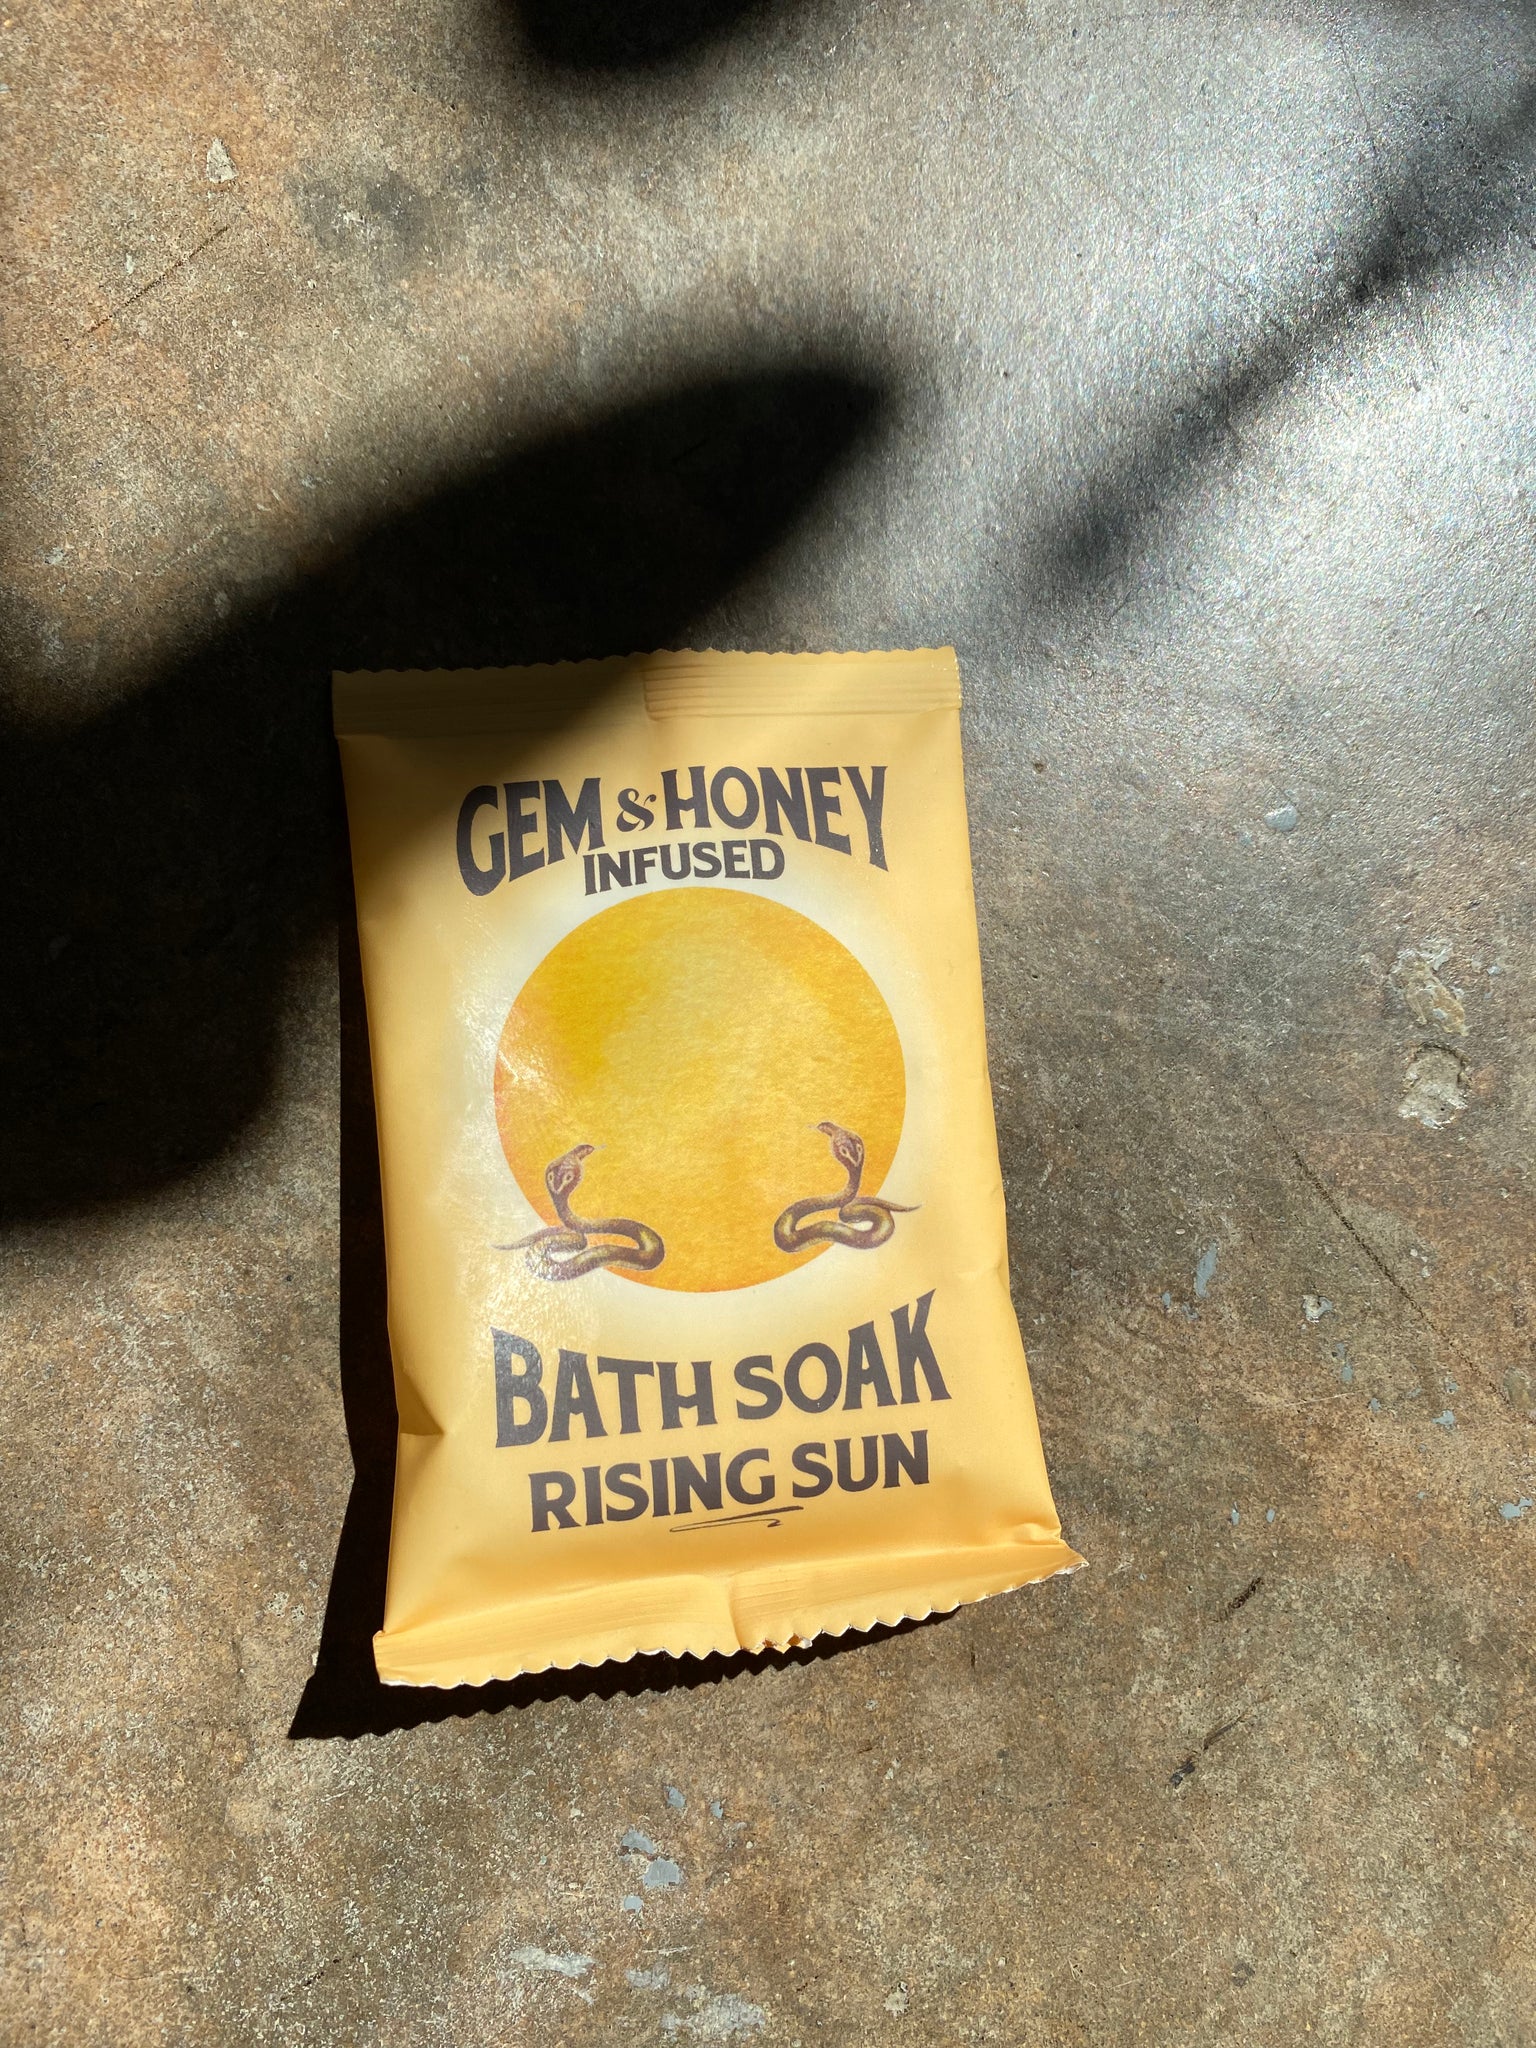 Gem & Honey Infused Bath Salts